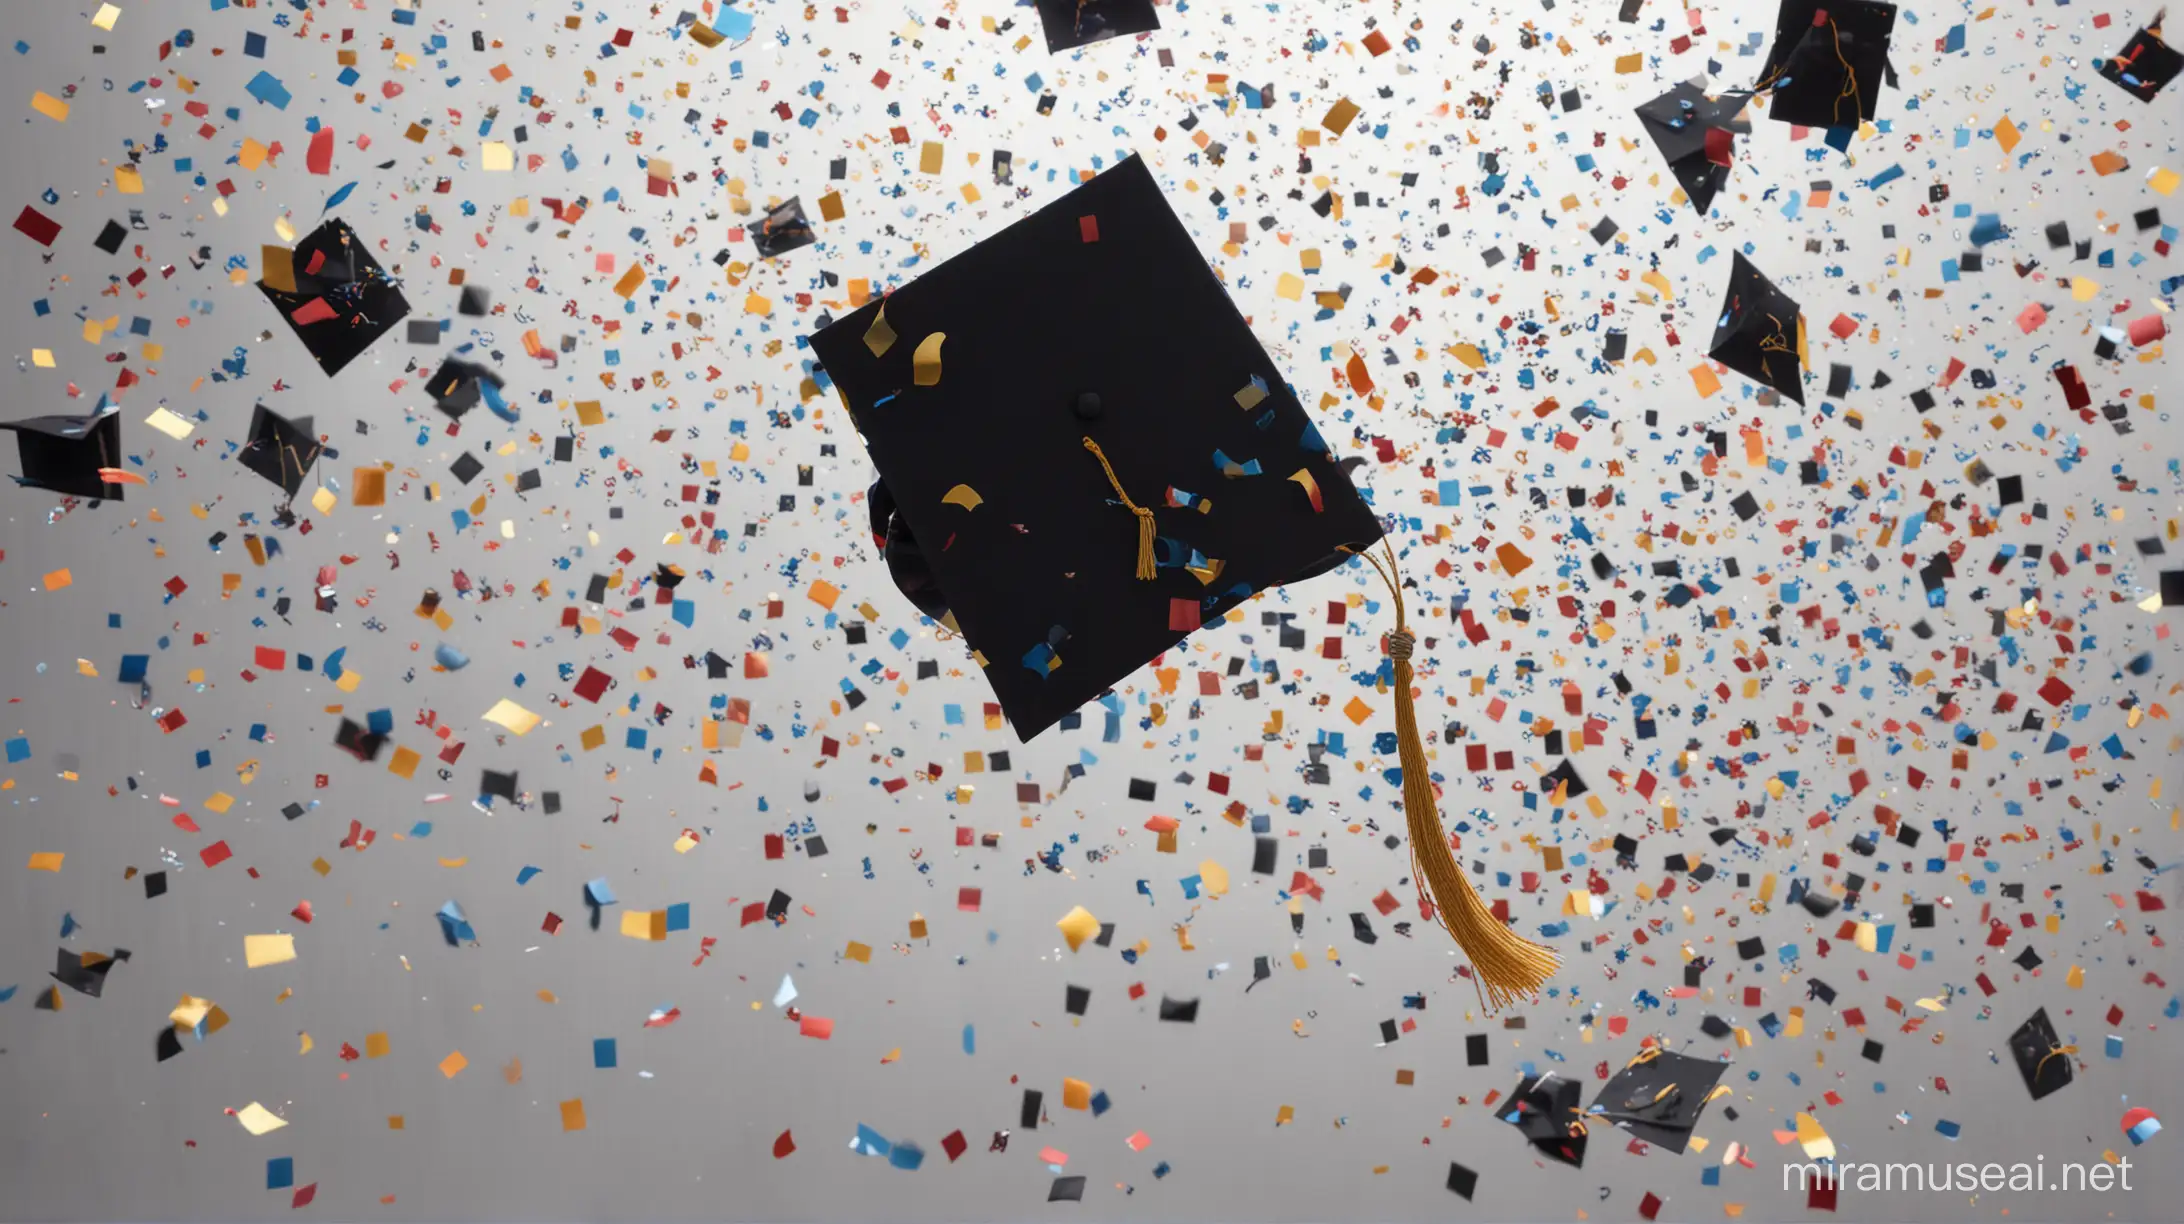 Flying Graduation Cap Amidst Confetti Shower